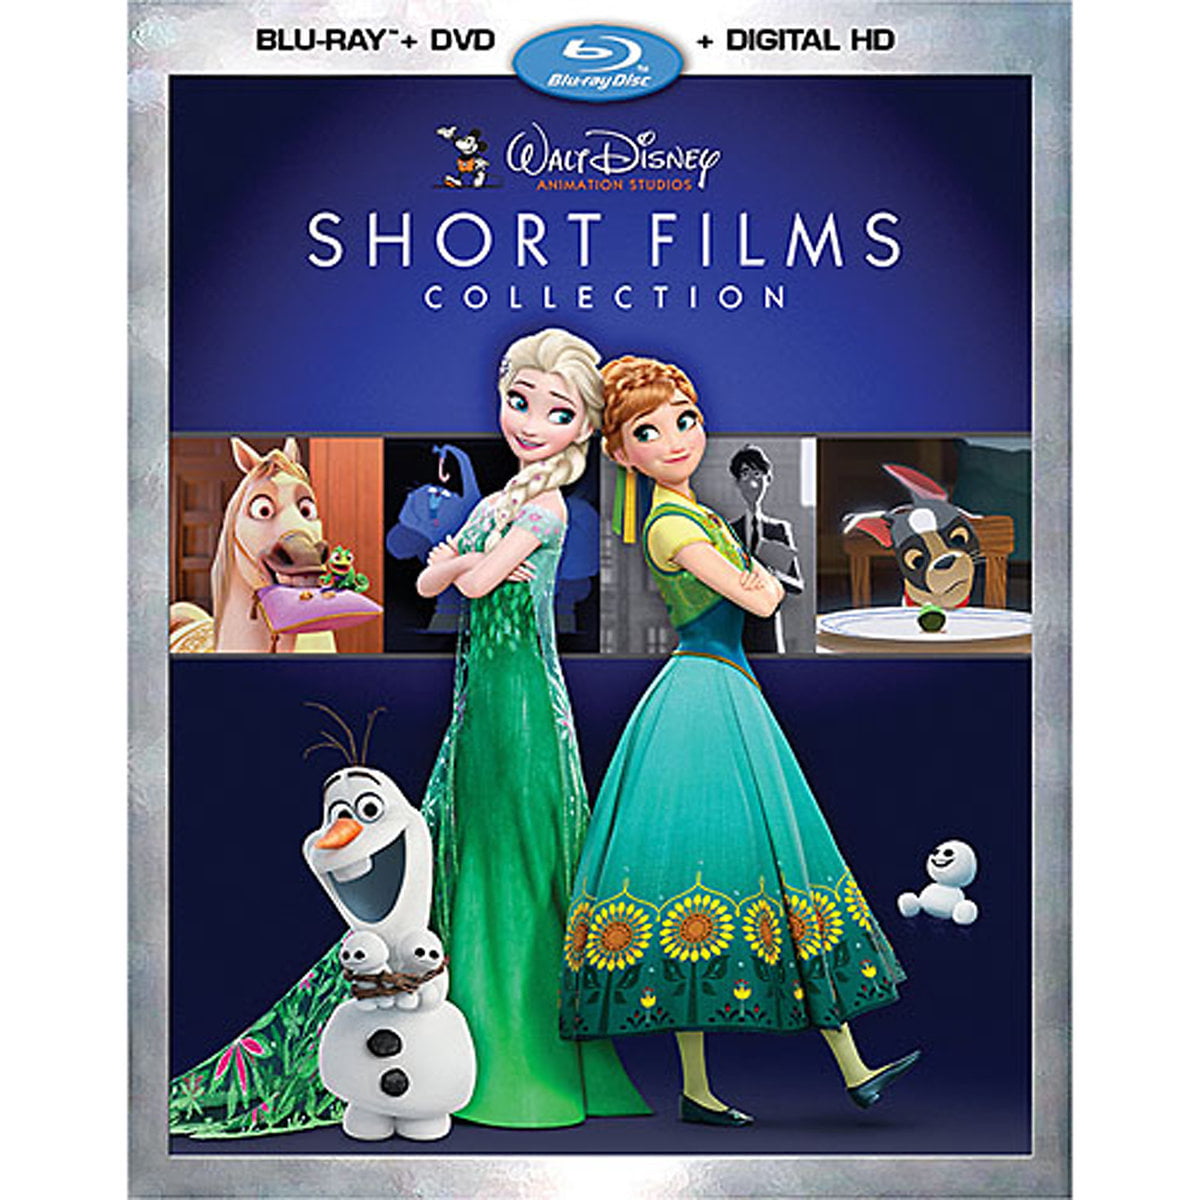 Walt Disney Animation Studios Short Films Collection (Blu-ray + DVD) -  